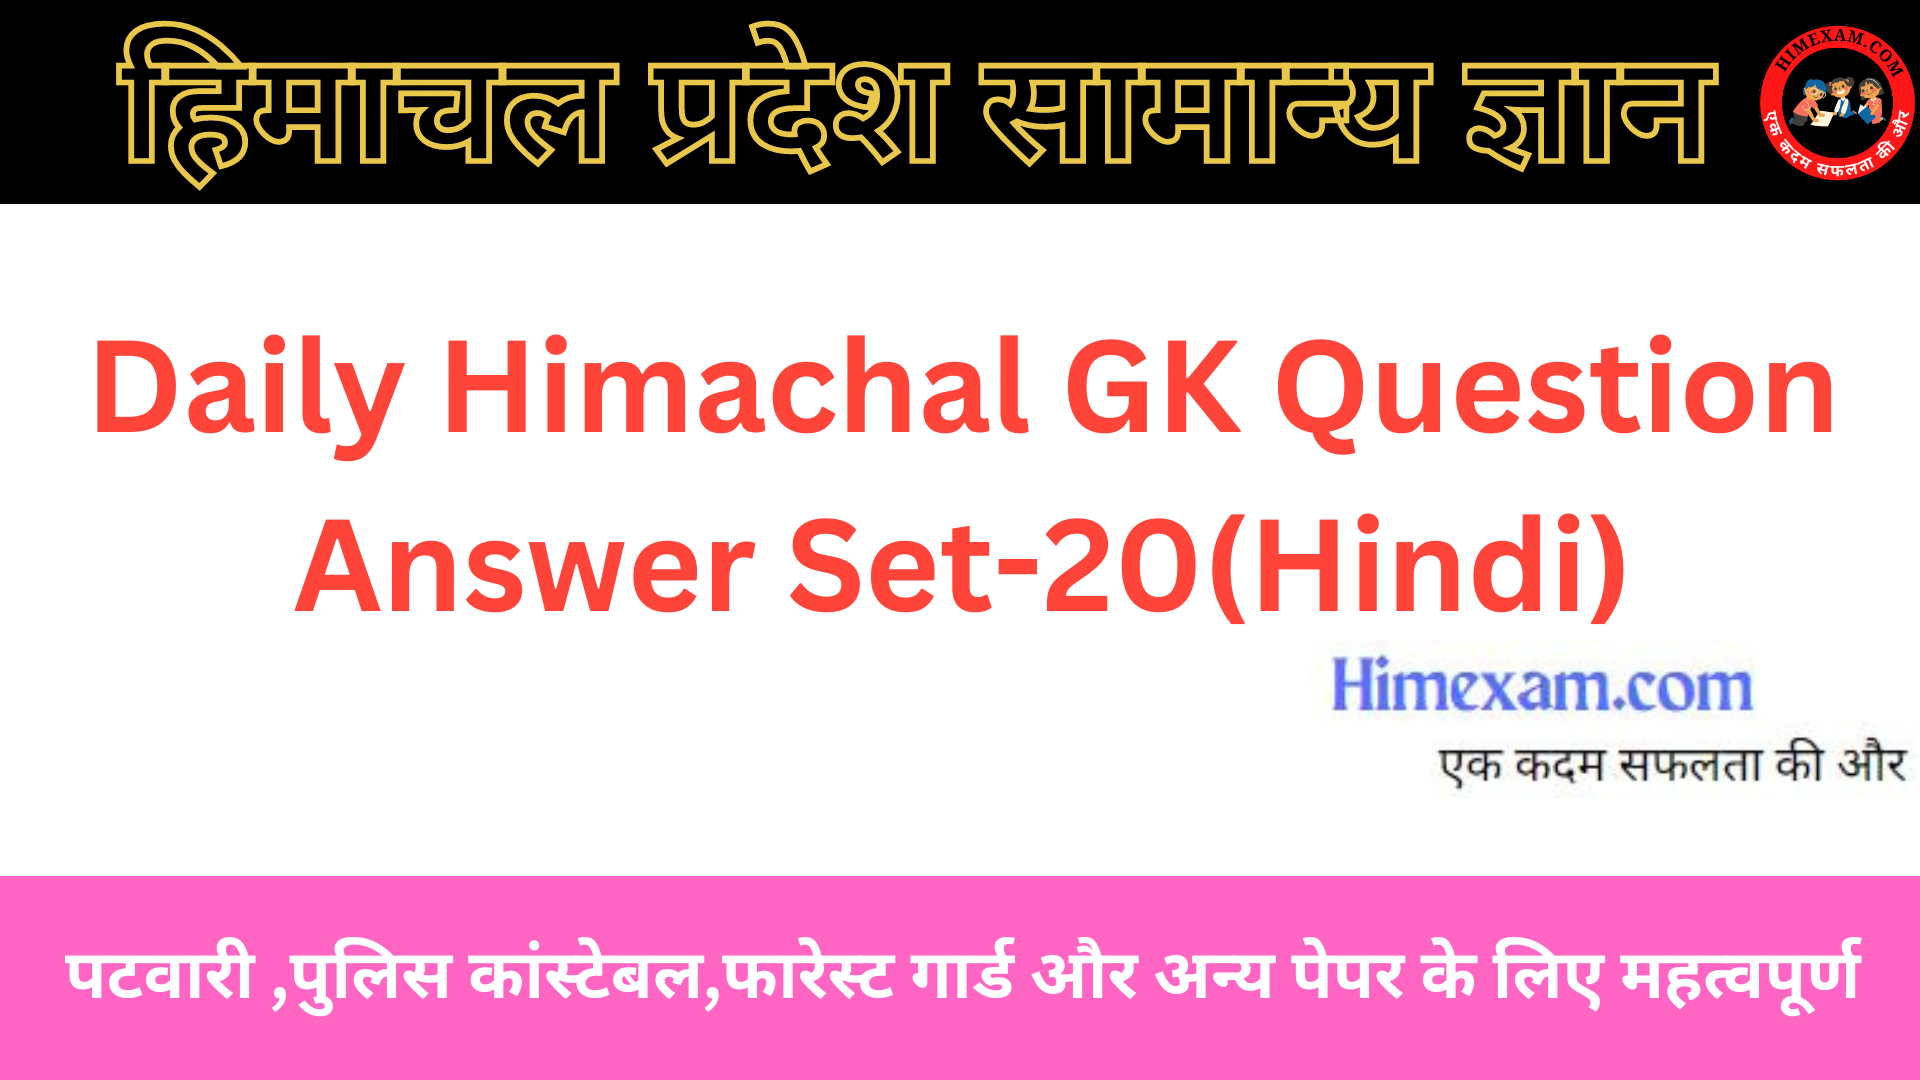 Daily Himachal GK Question Answer Set-20(Hindi)